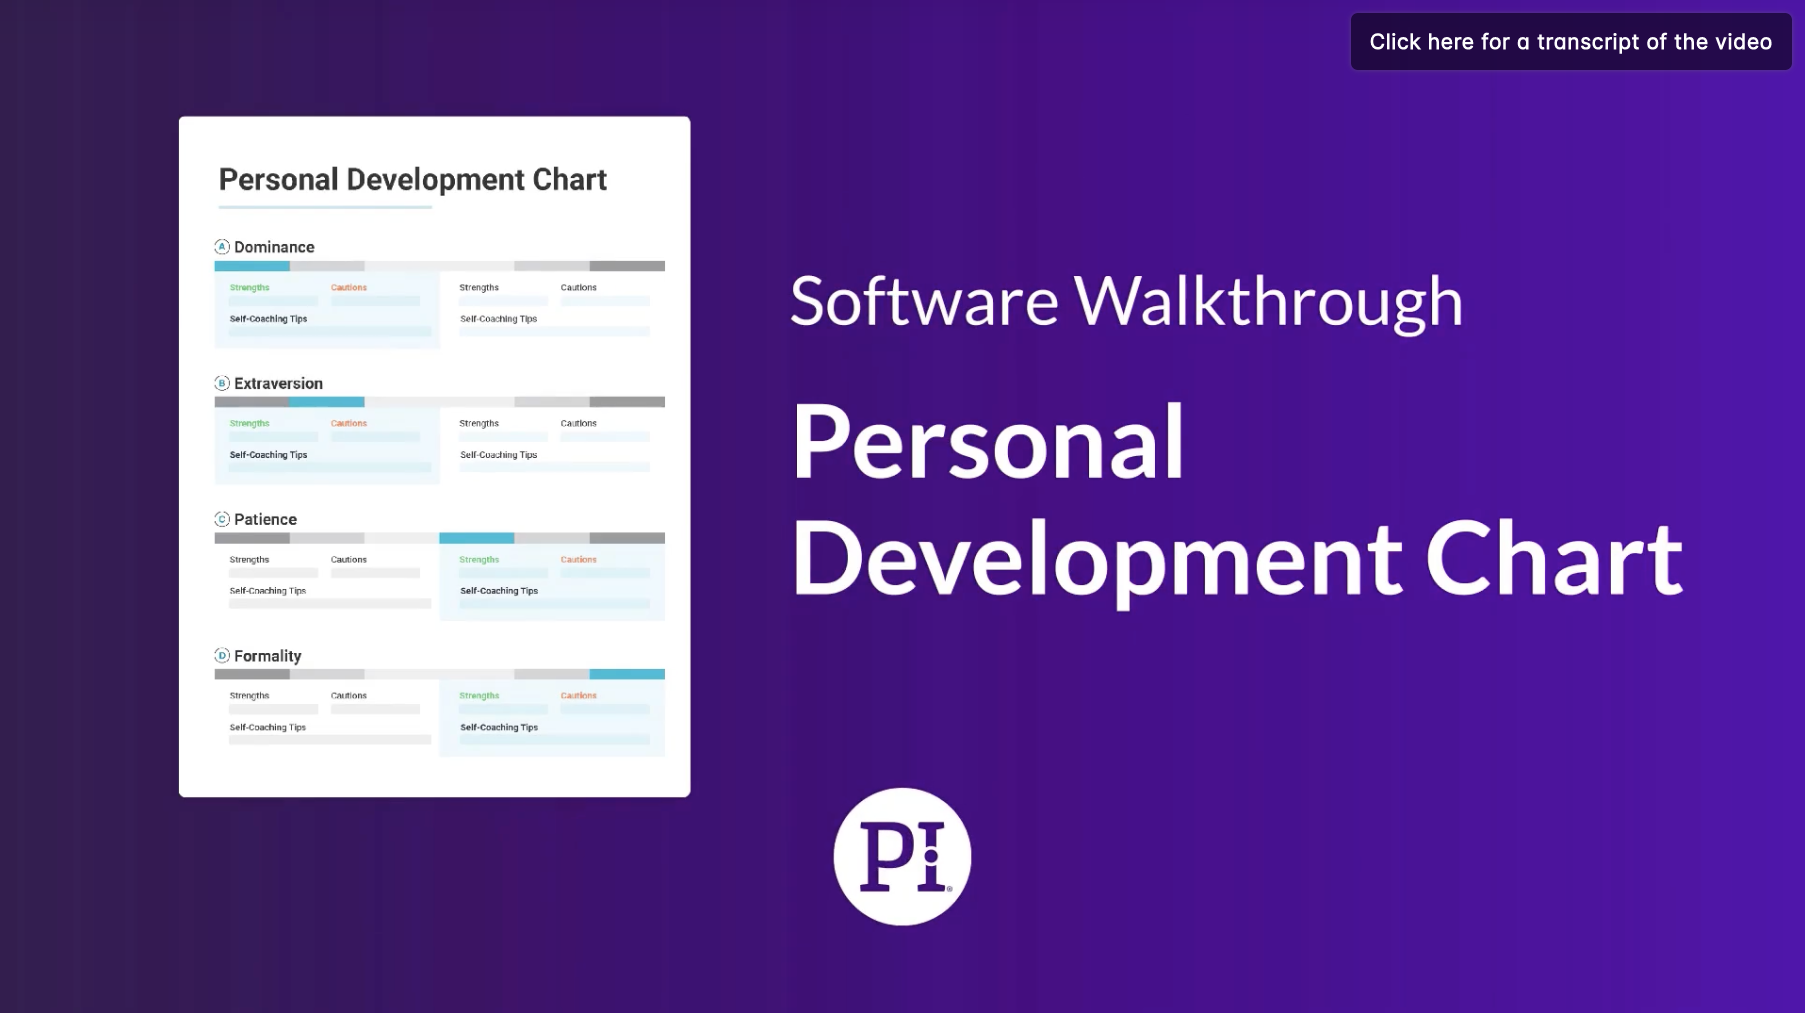 PI Personal Development Chart Walkthrough